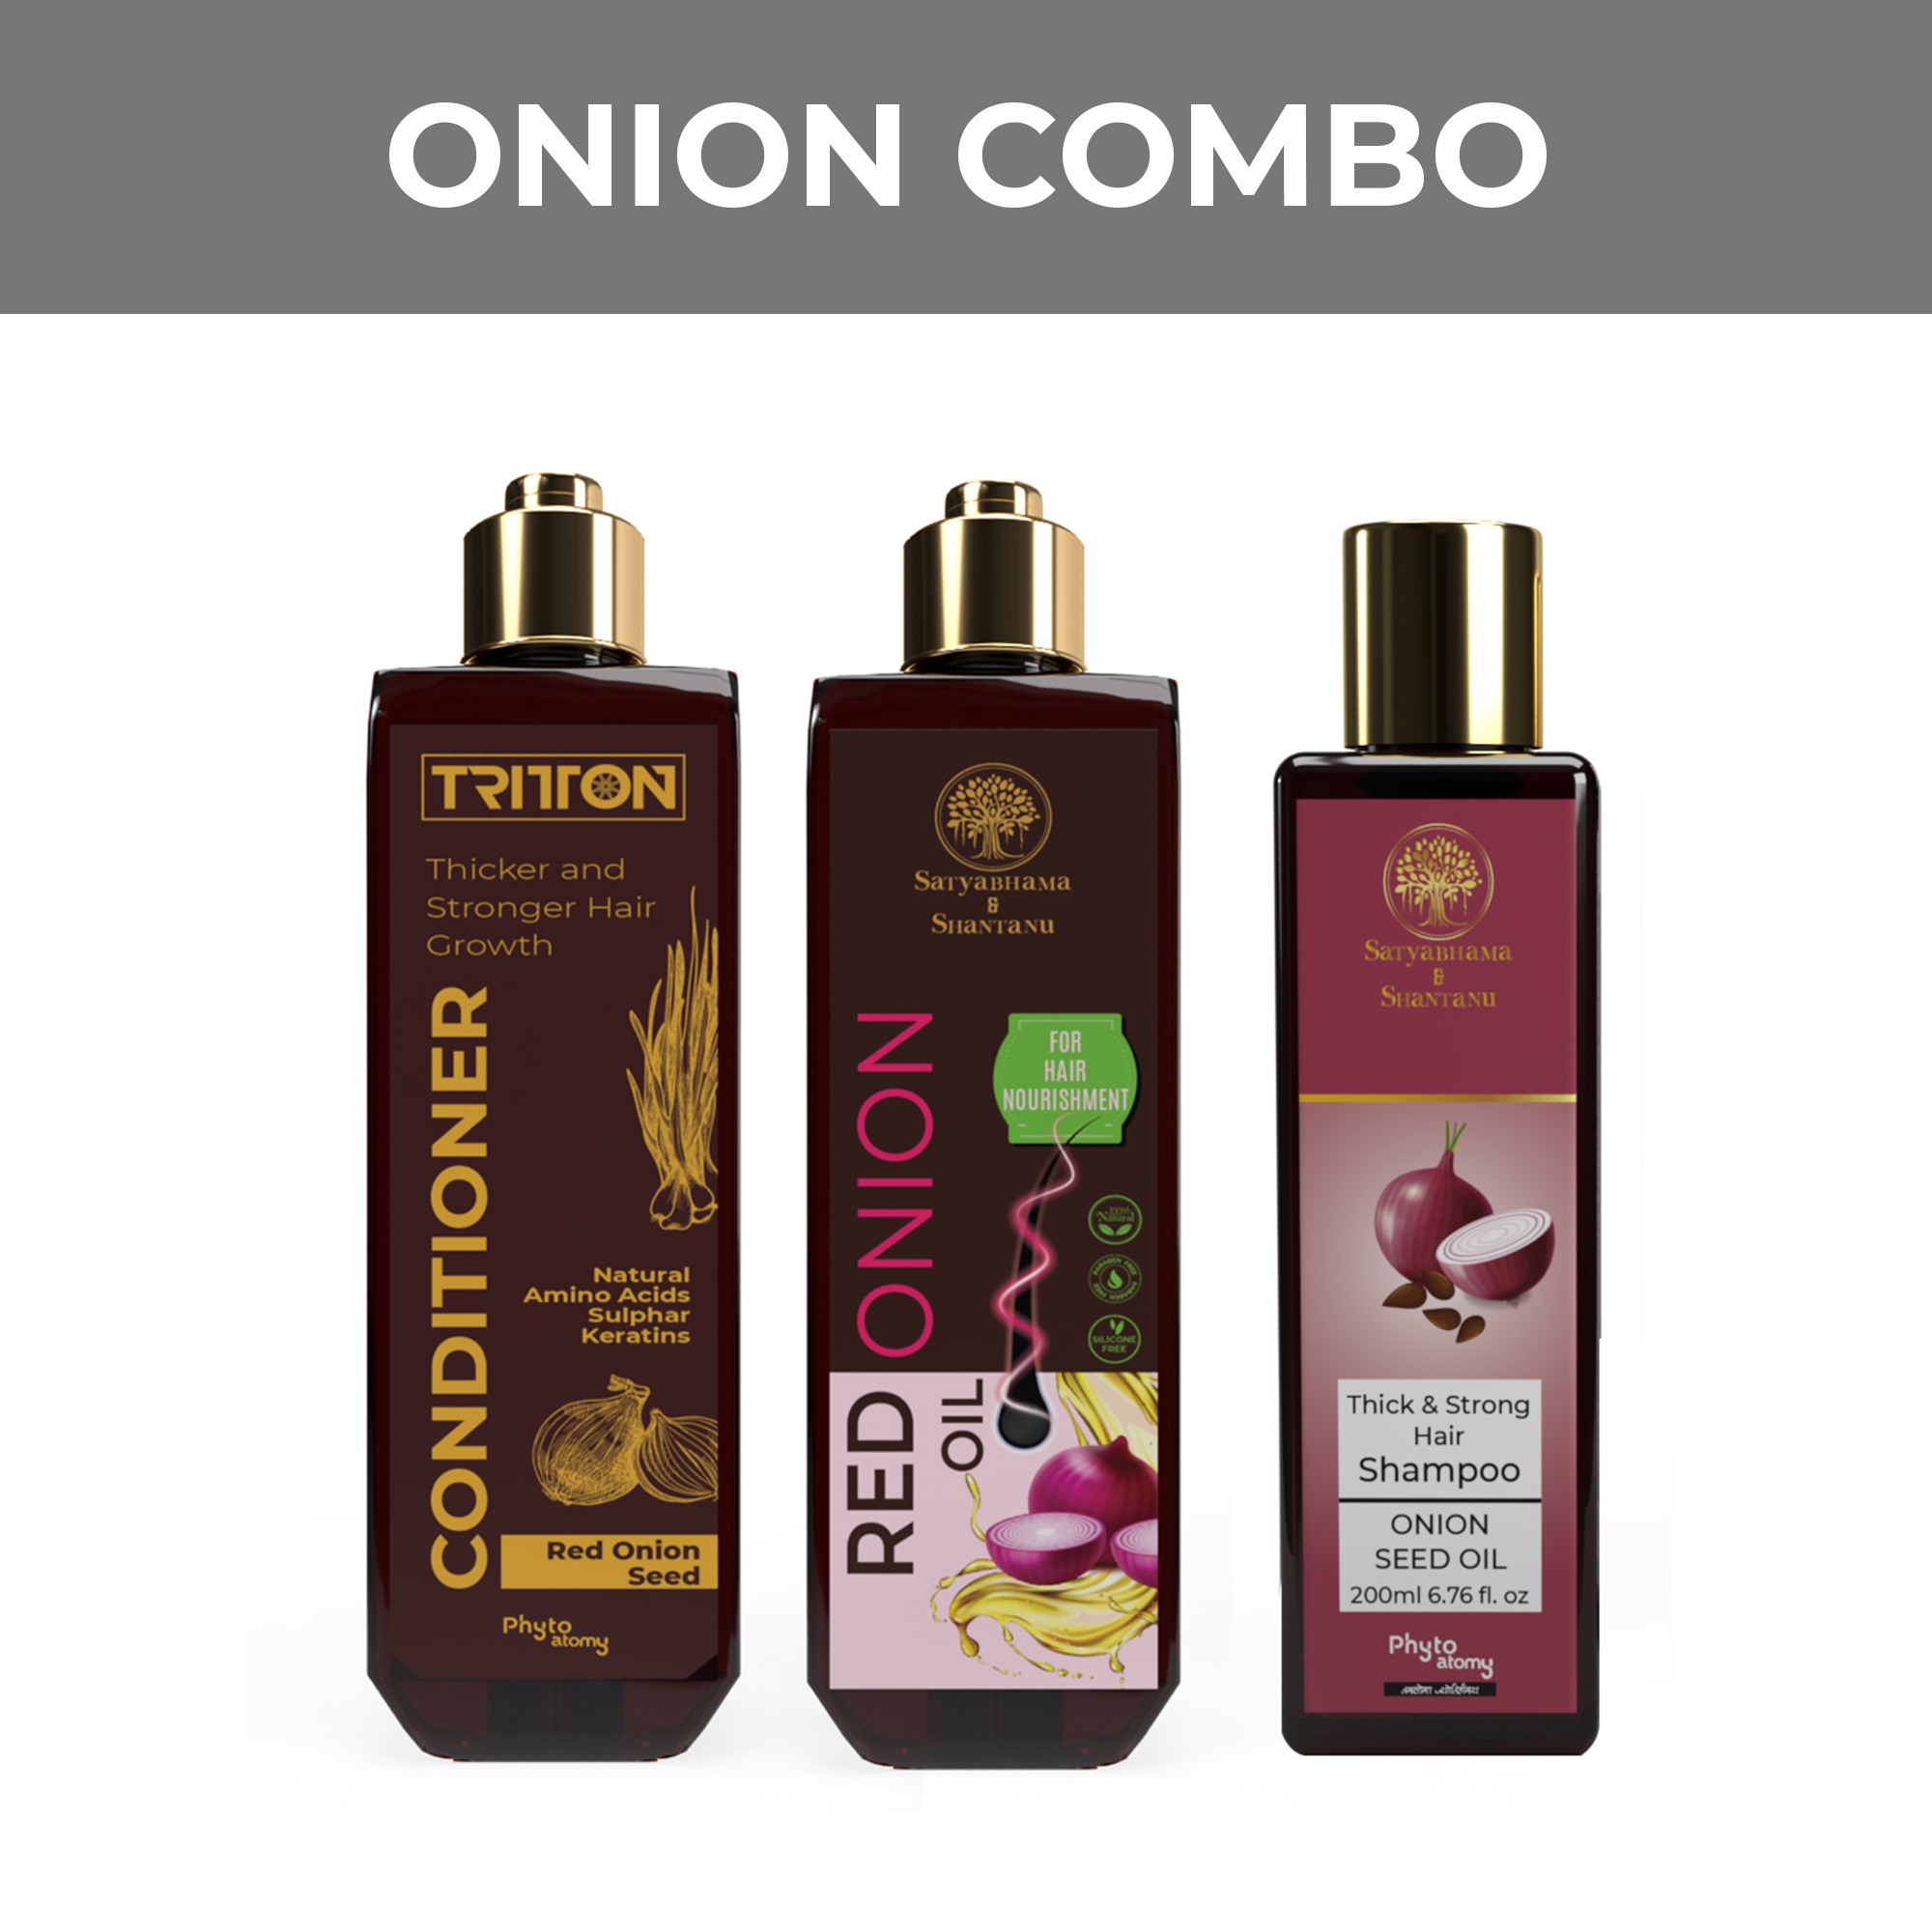 Onion Combo